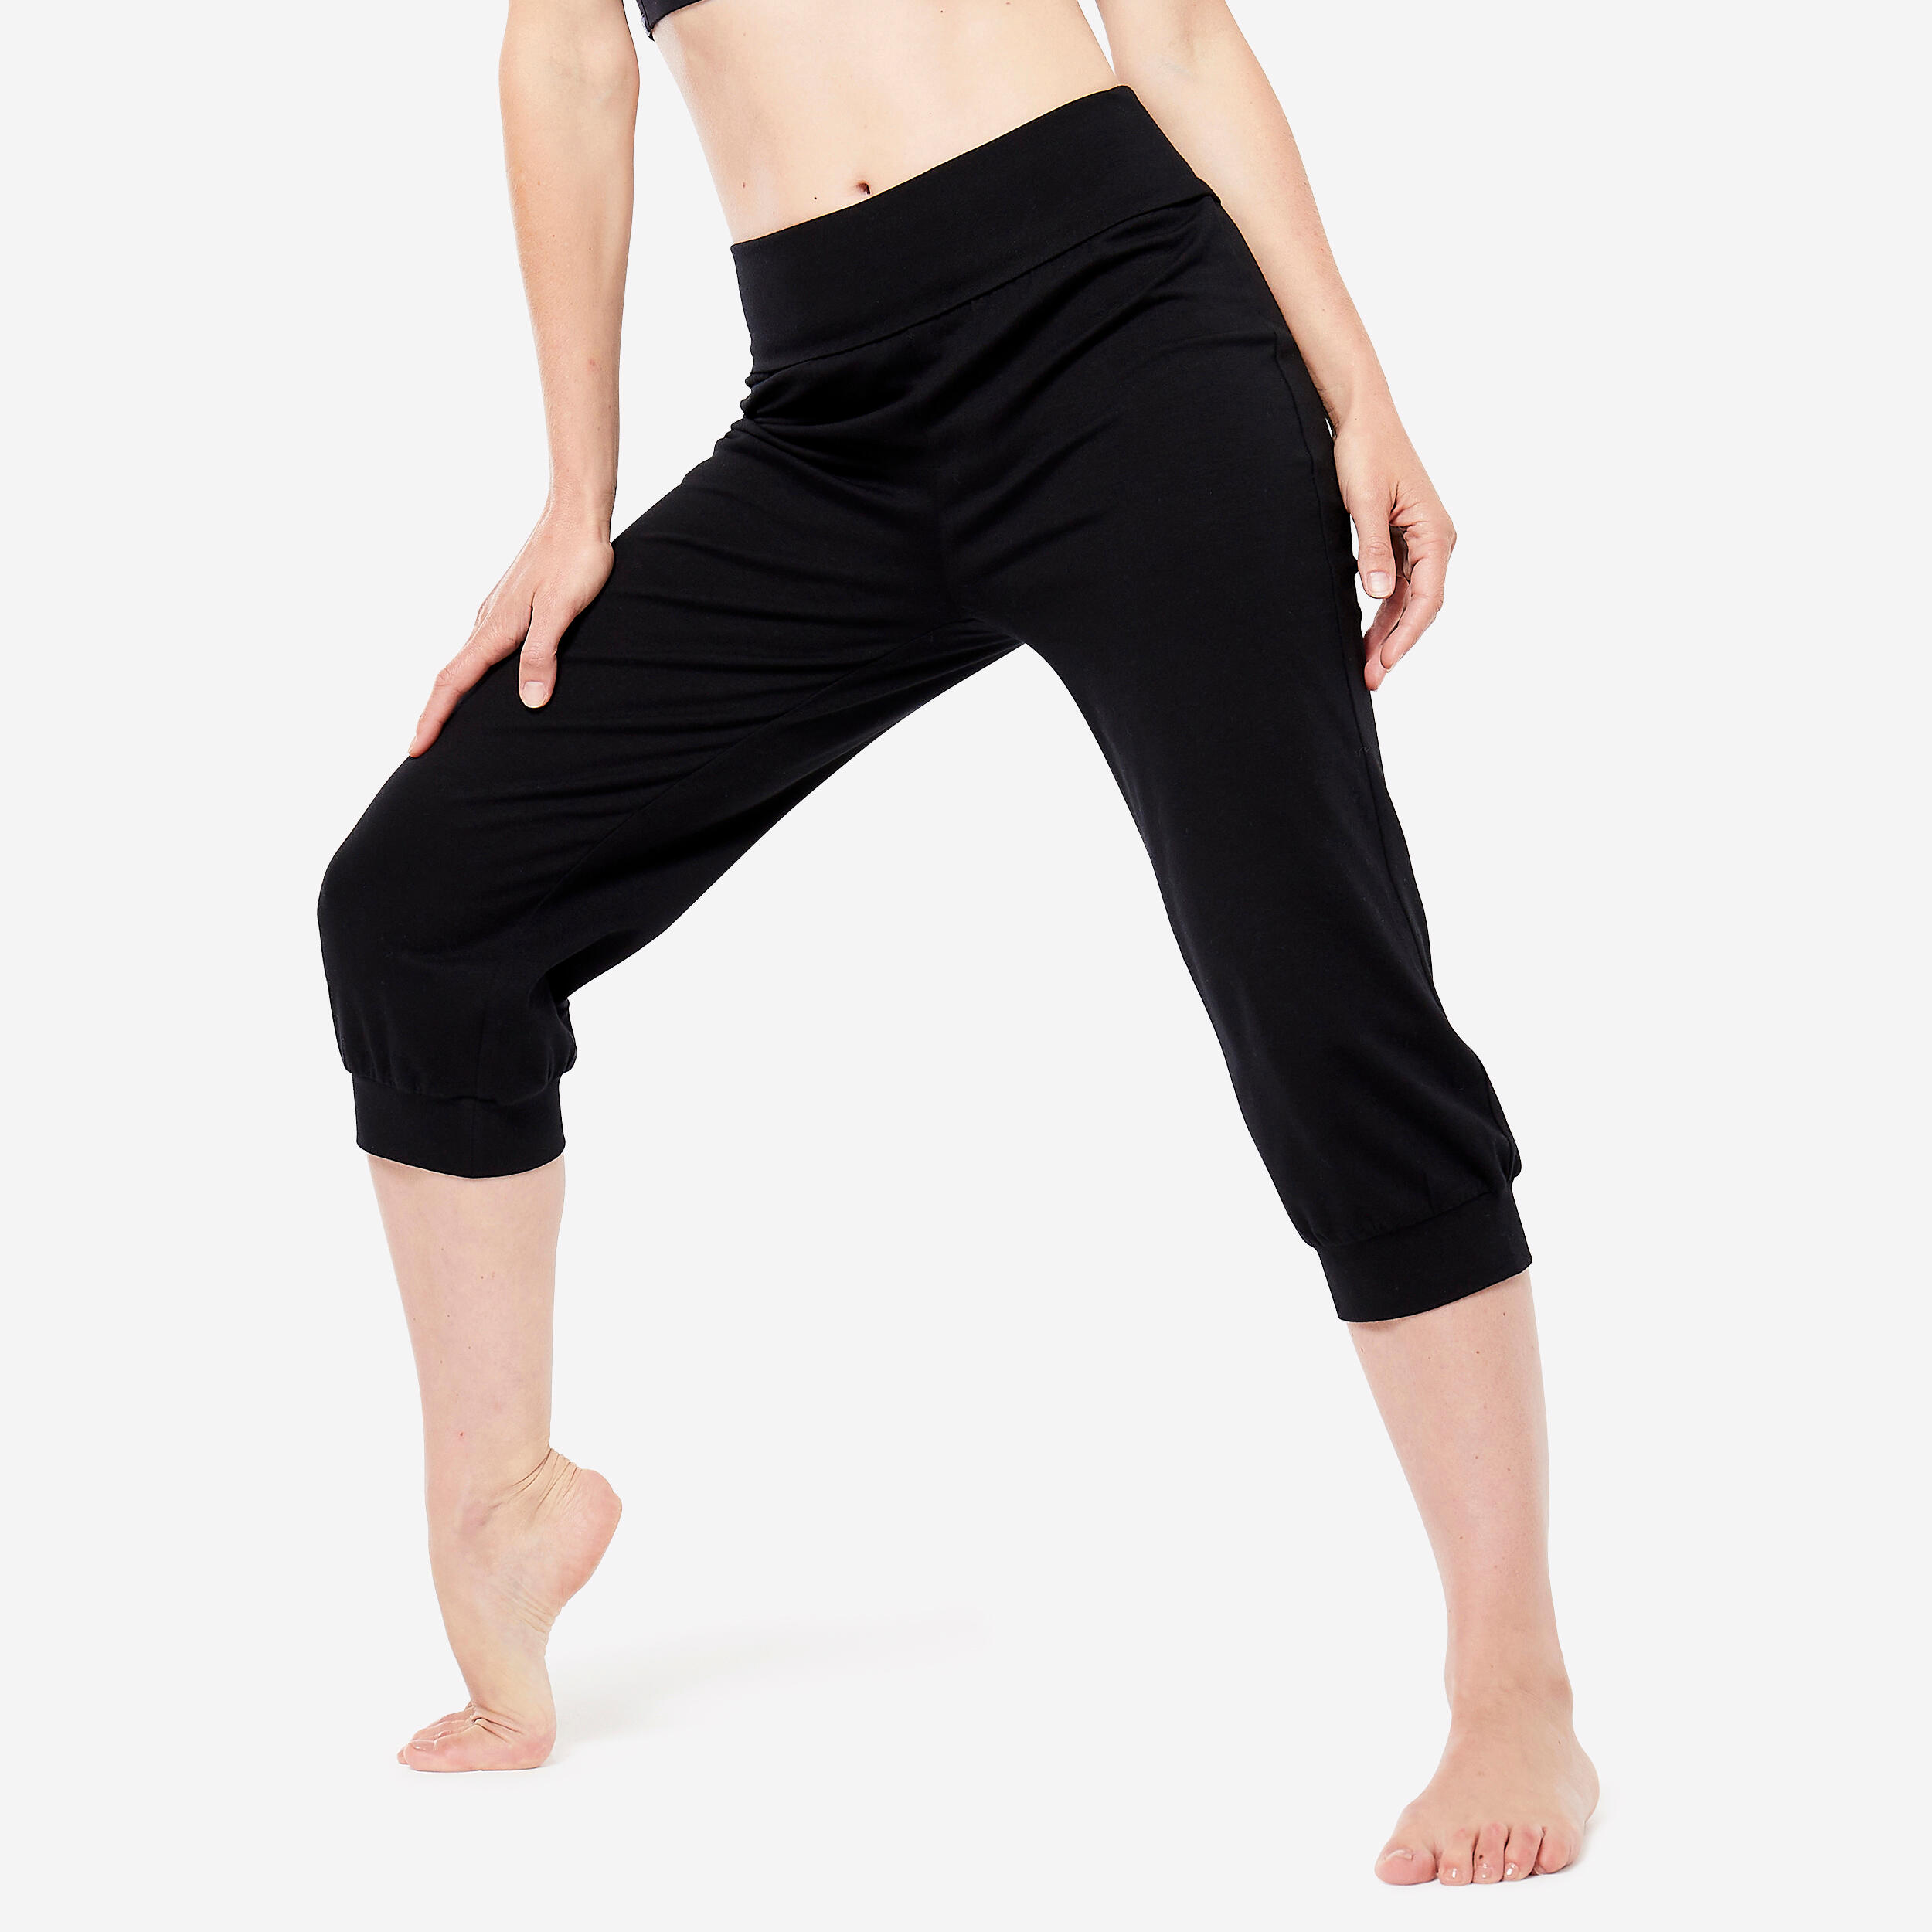 Womens Small Capri Crop Yoga Pants, Waistband Pocket, Cotton Stretch Black  Yoga City San Diego Crop Yoga Pants, Drawstring Waist Yoga Pants 